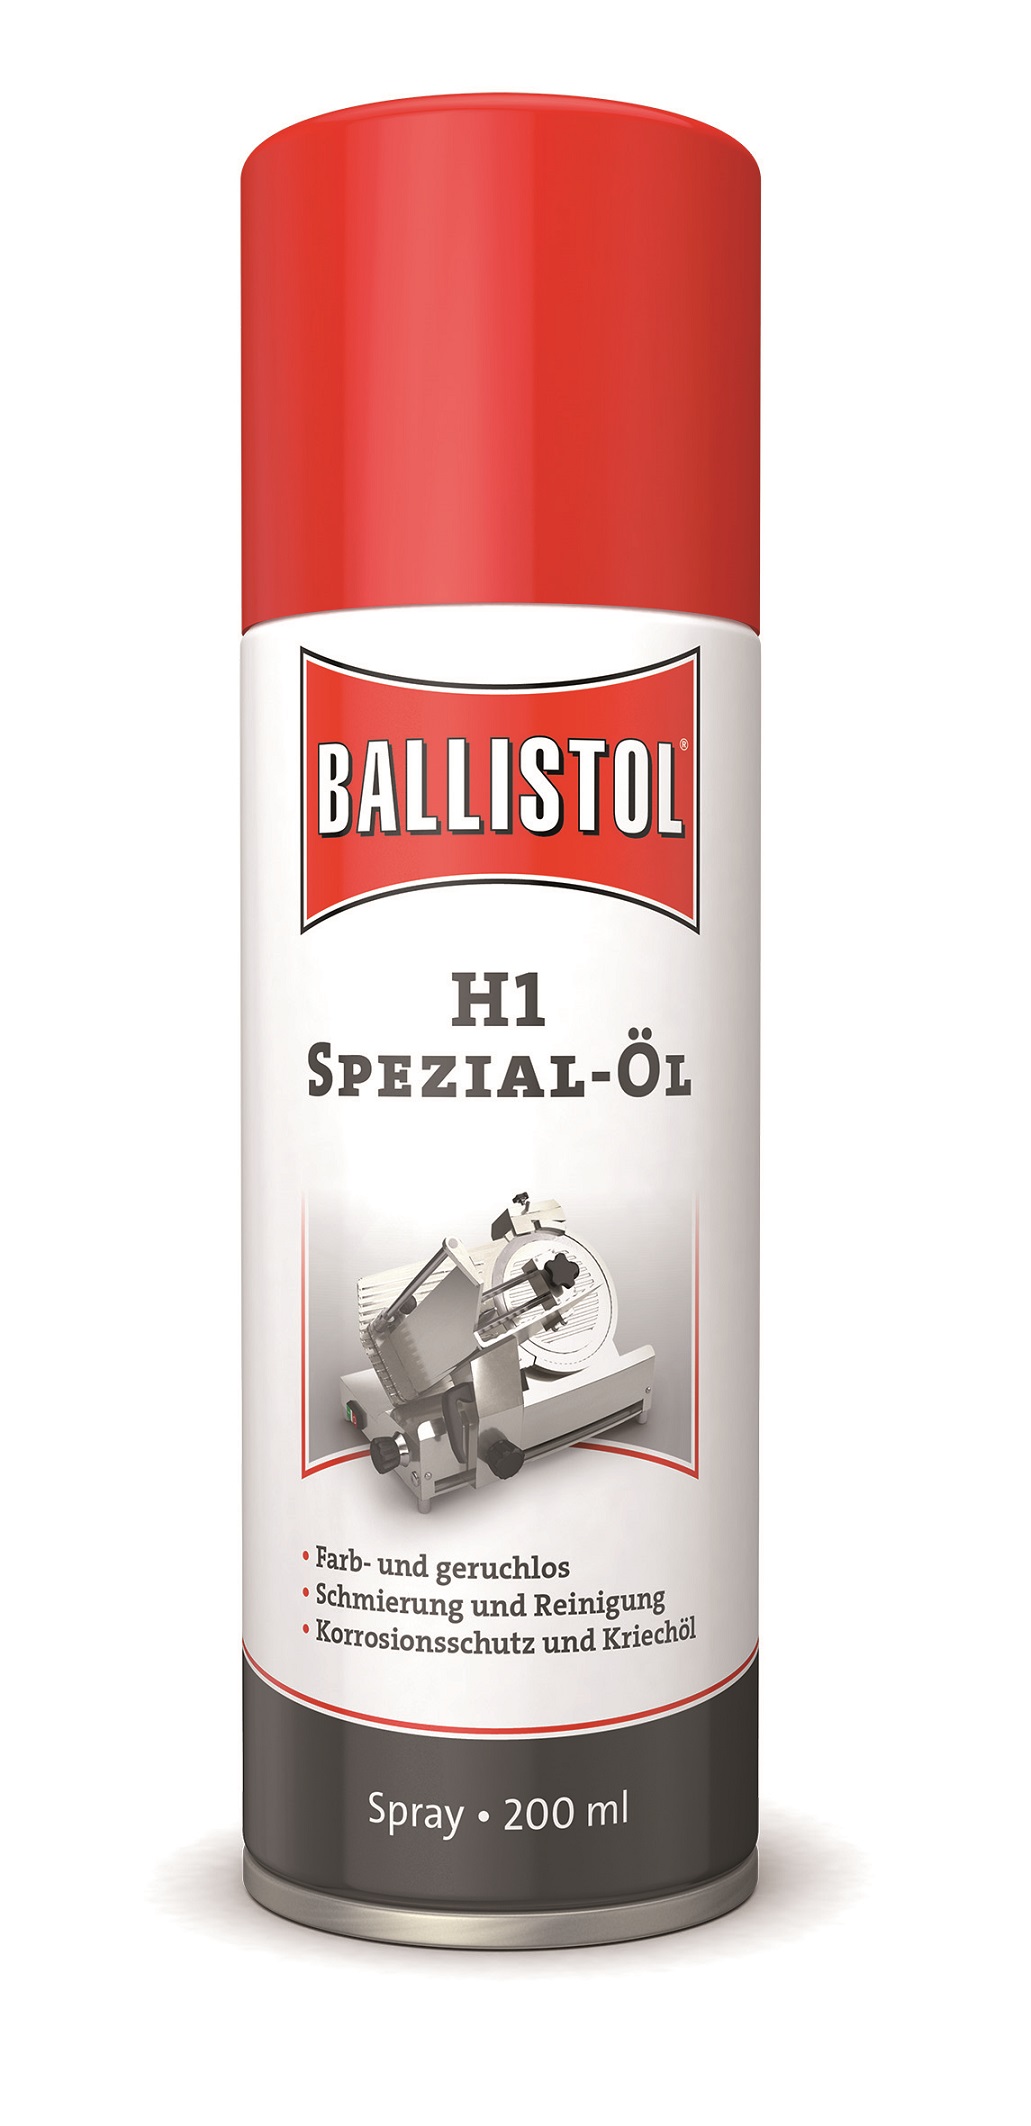 https://imker-onlineshop.de/media/image/0b/15/37/Ballistol-H1-Spezial-Ol-200ml-Spray.jpg